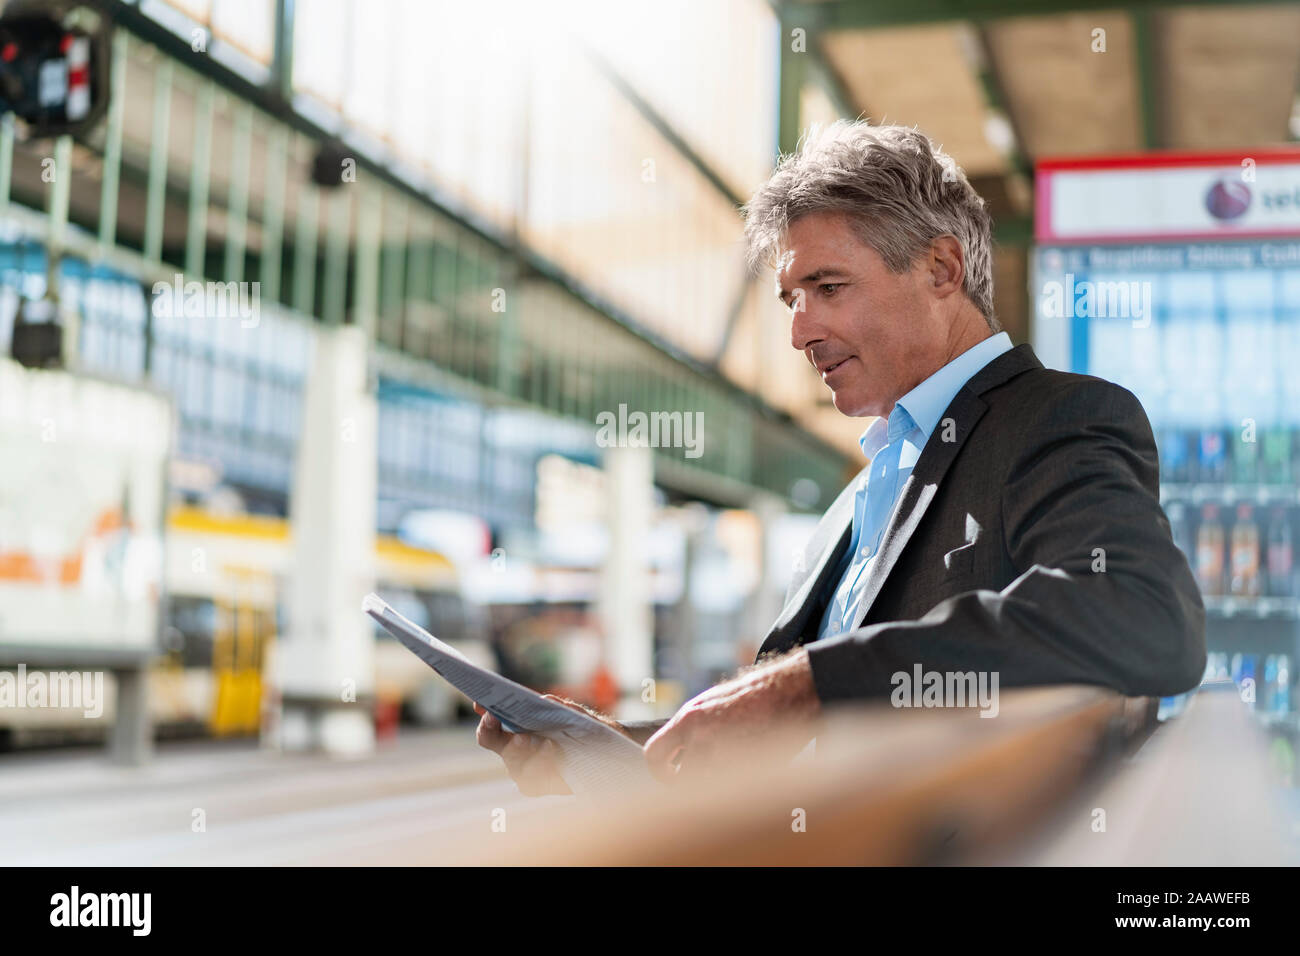 Mature businessman reading newspaper on station platform Stock Photo